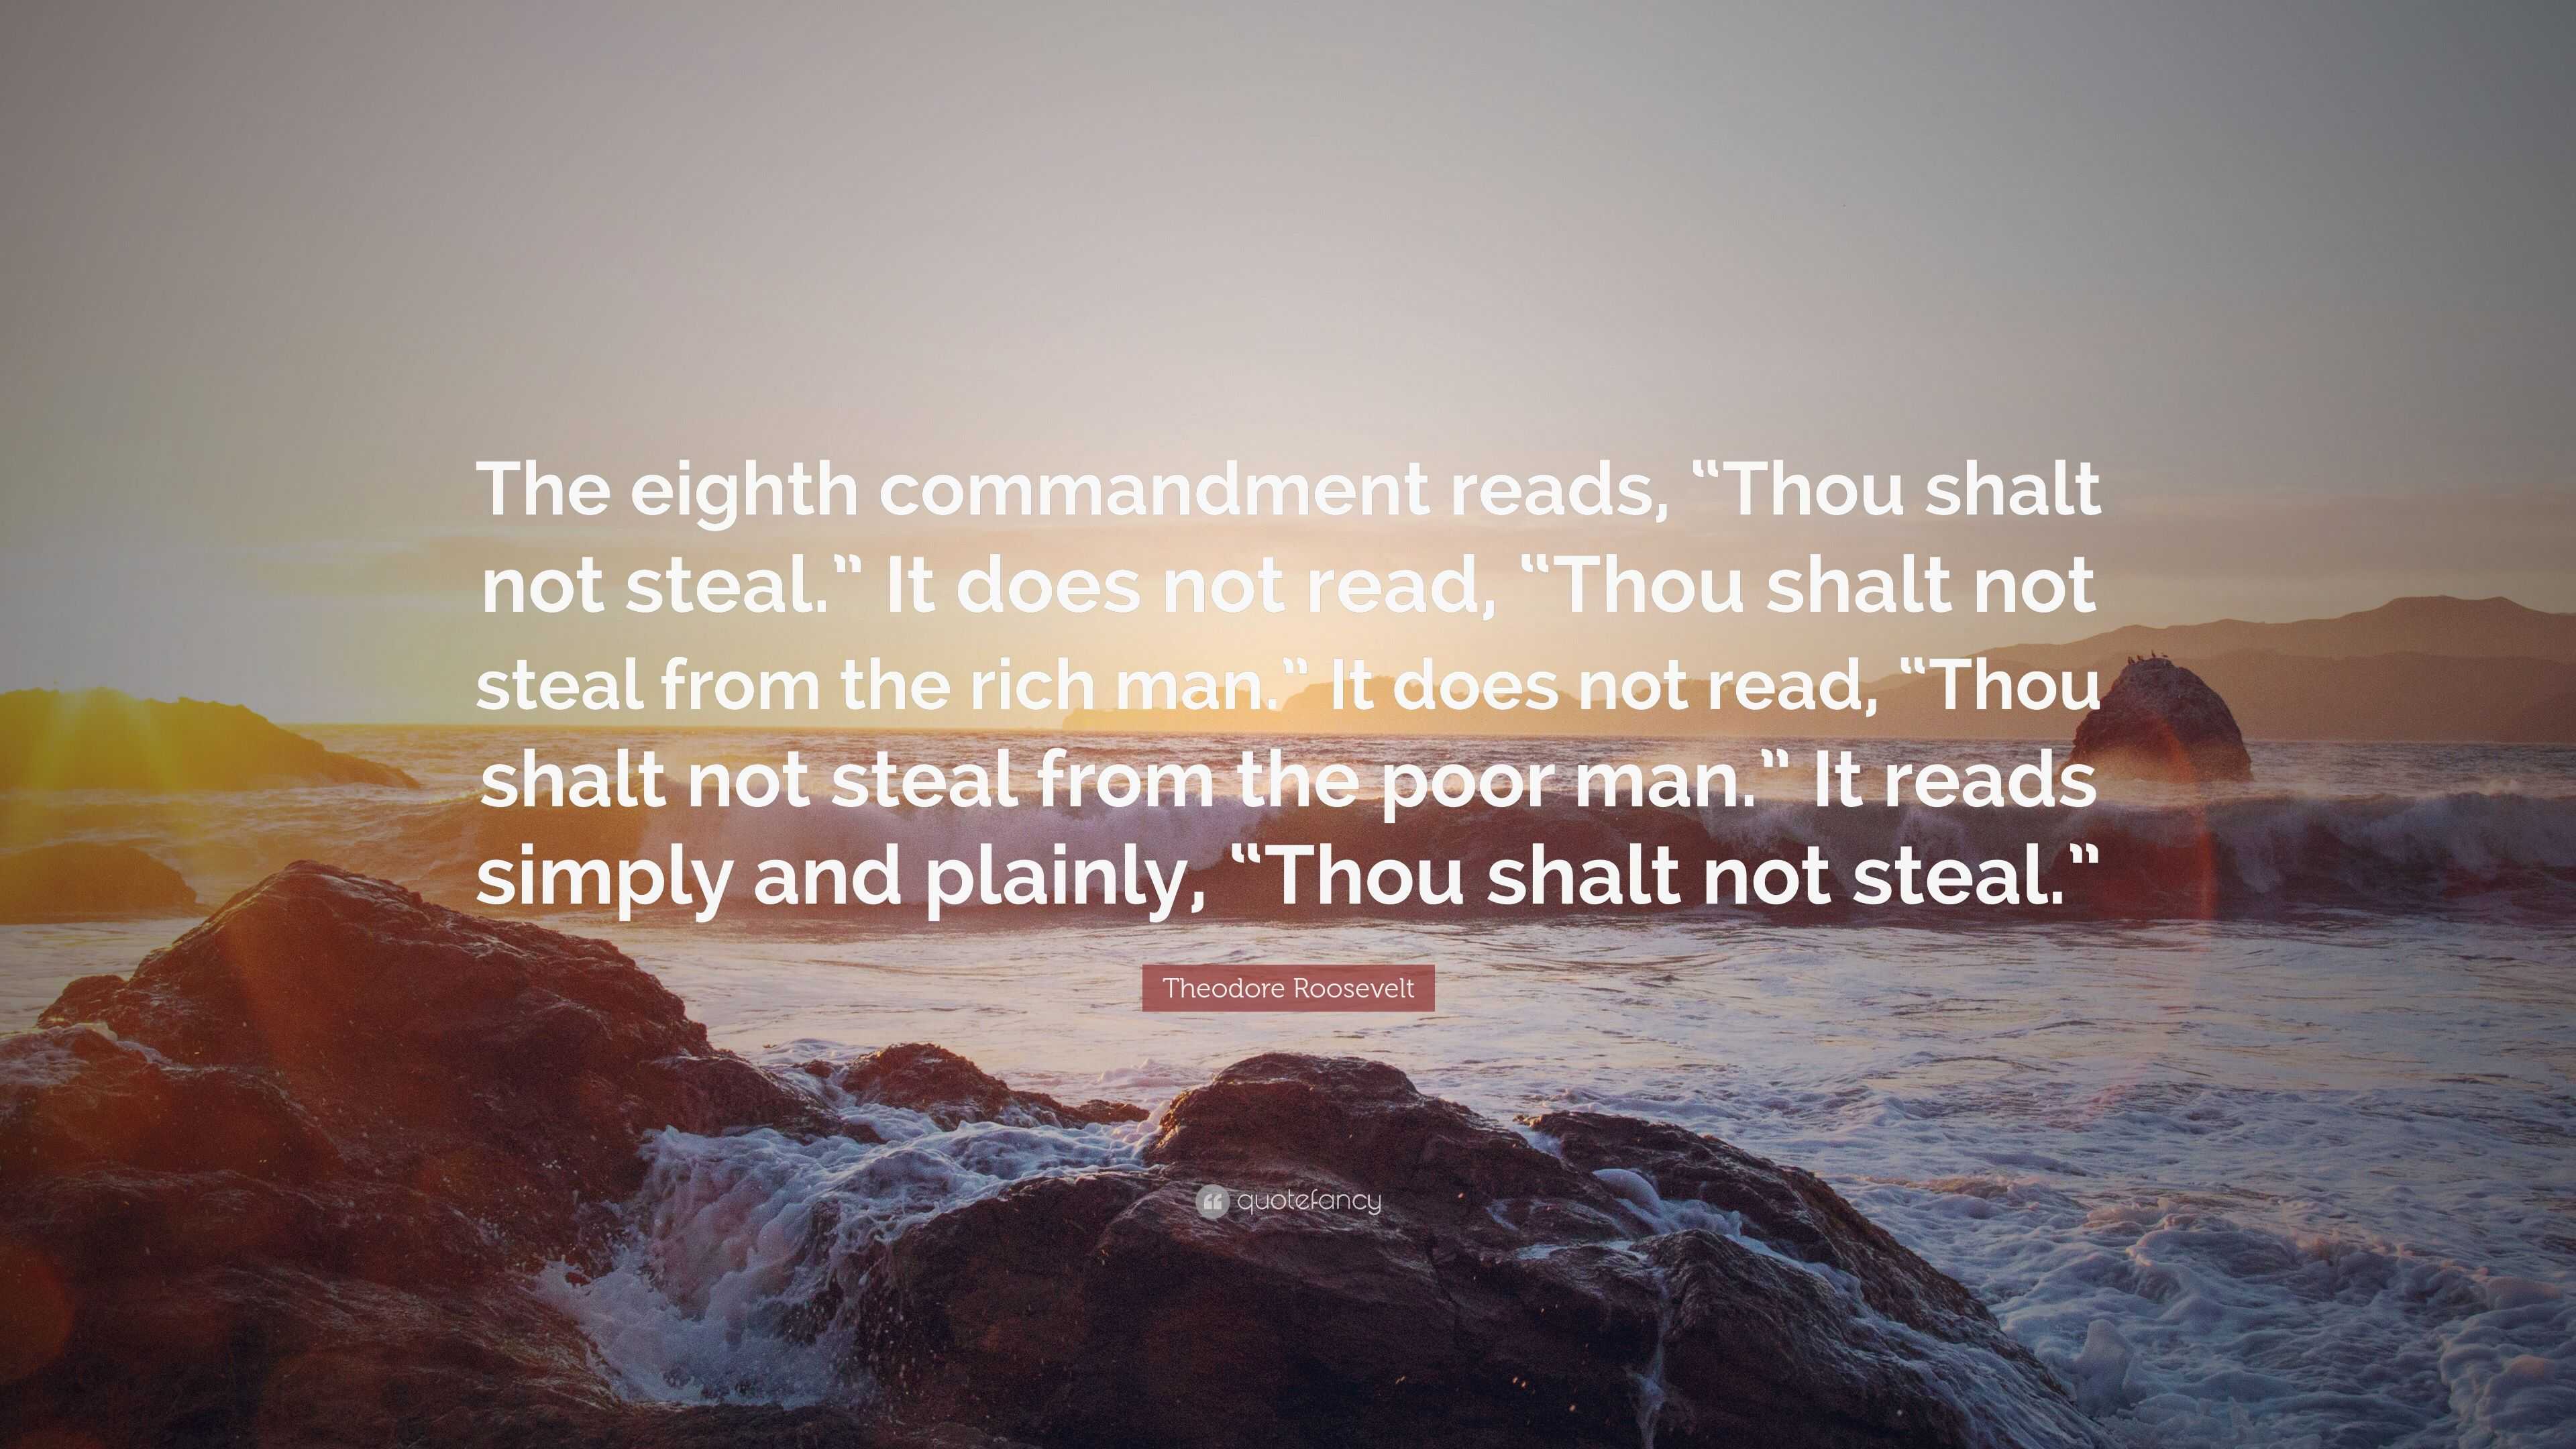 which commandment says thou shalt not kill